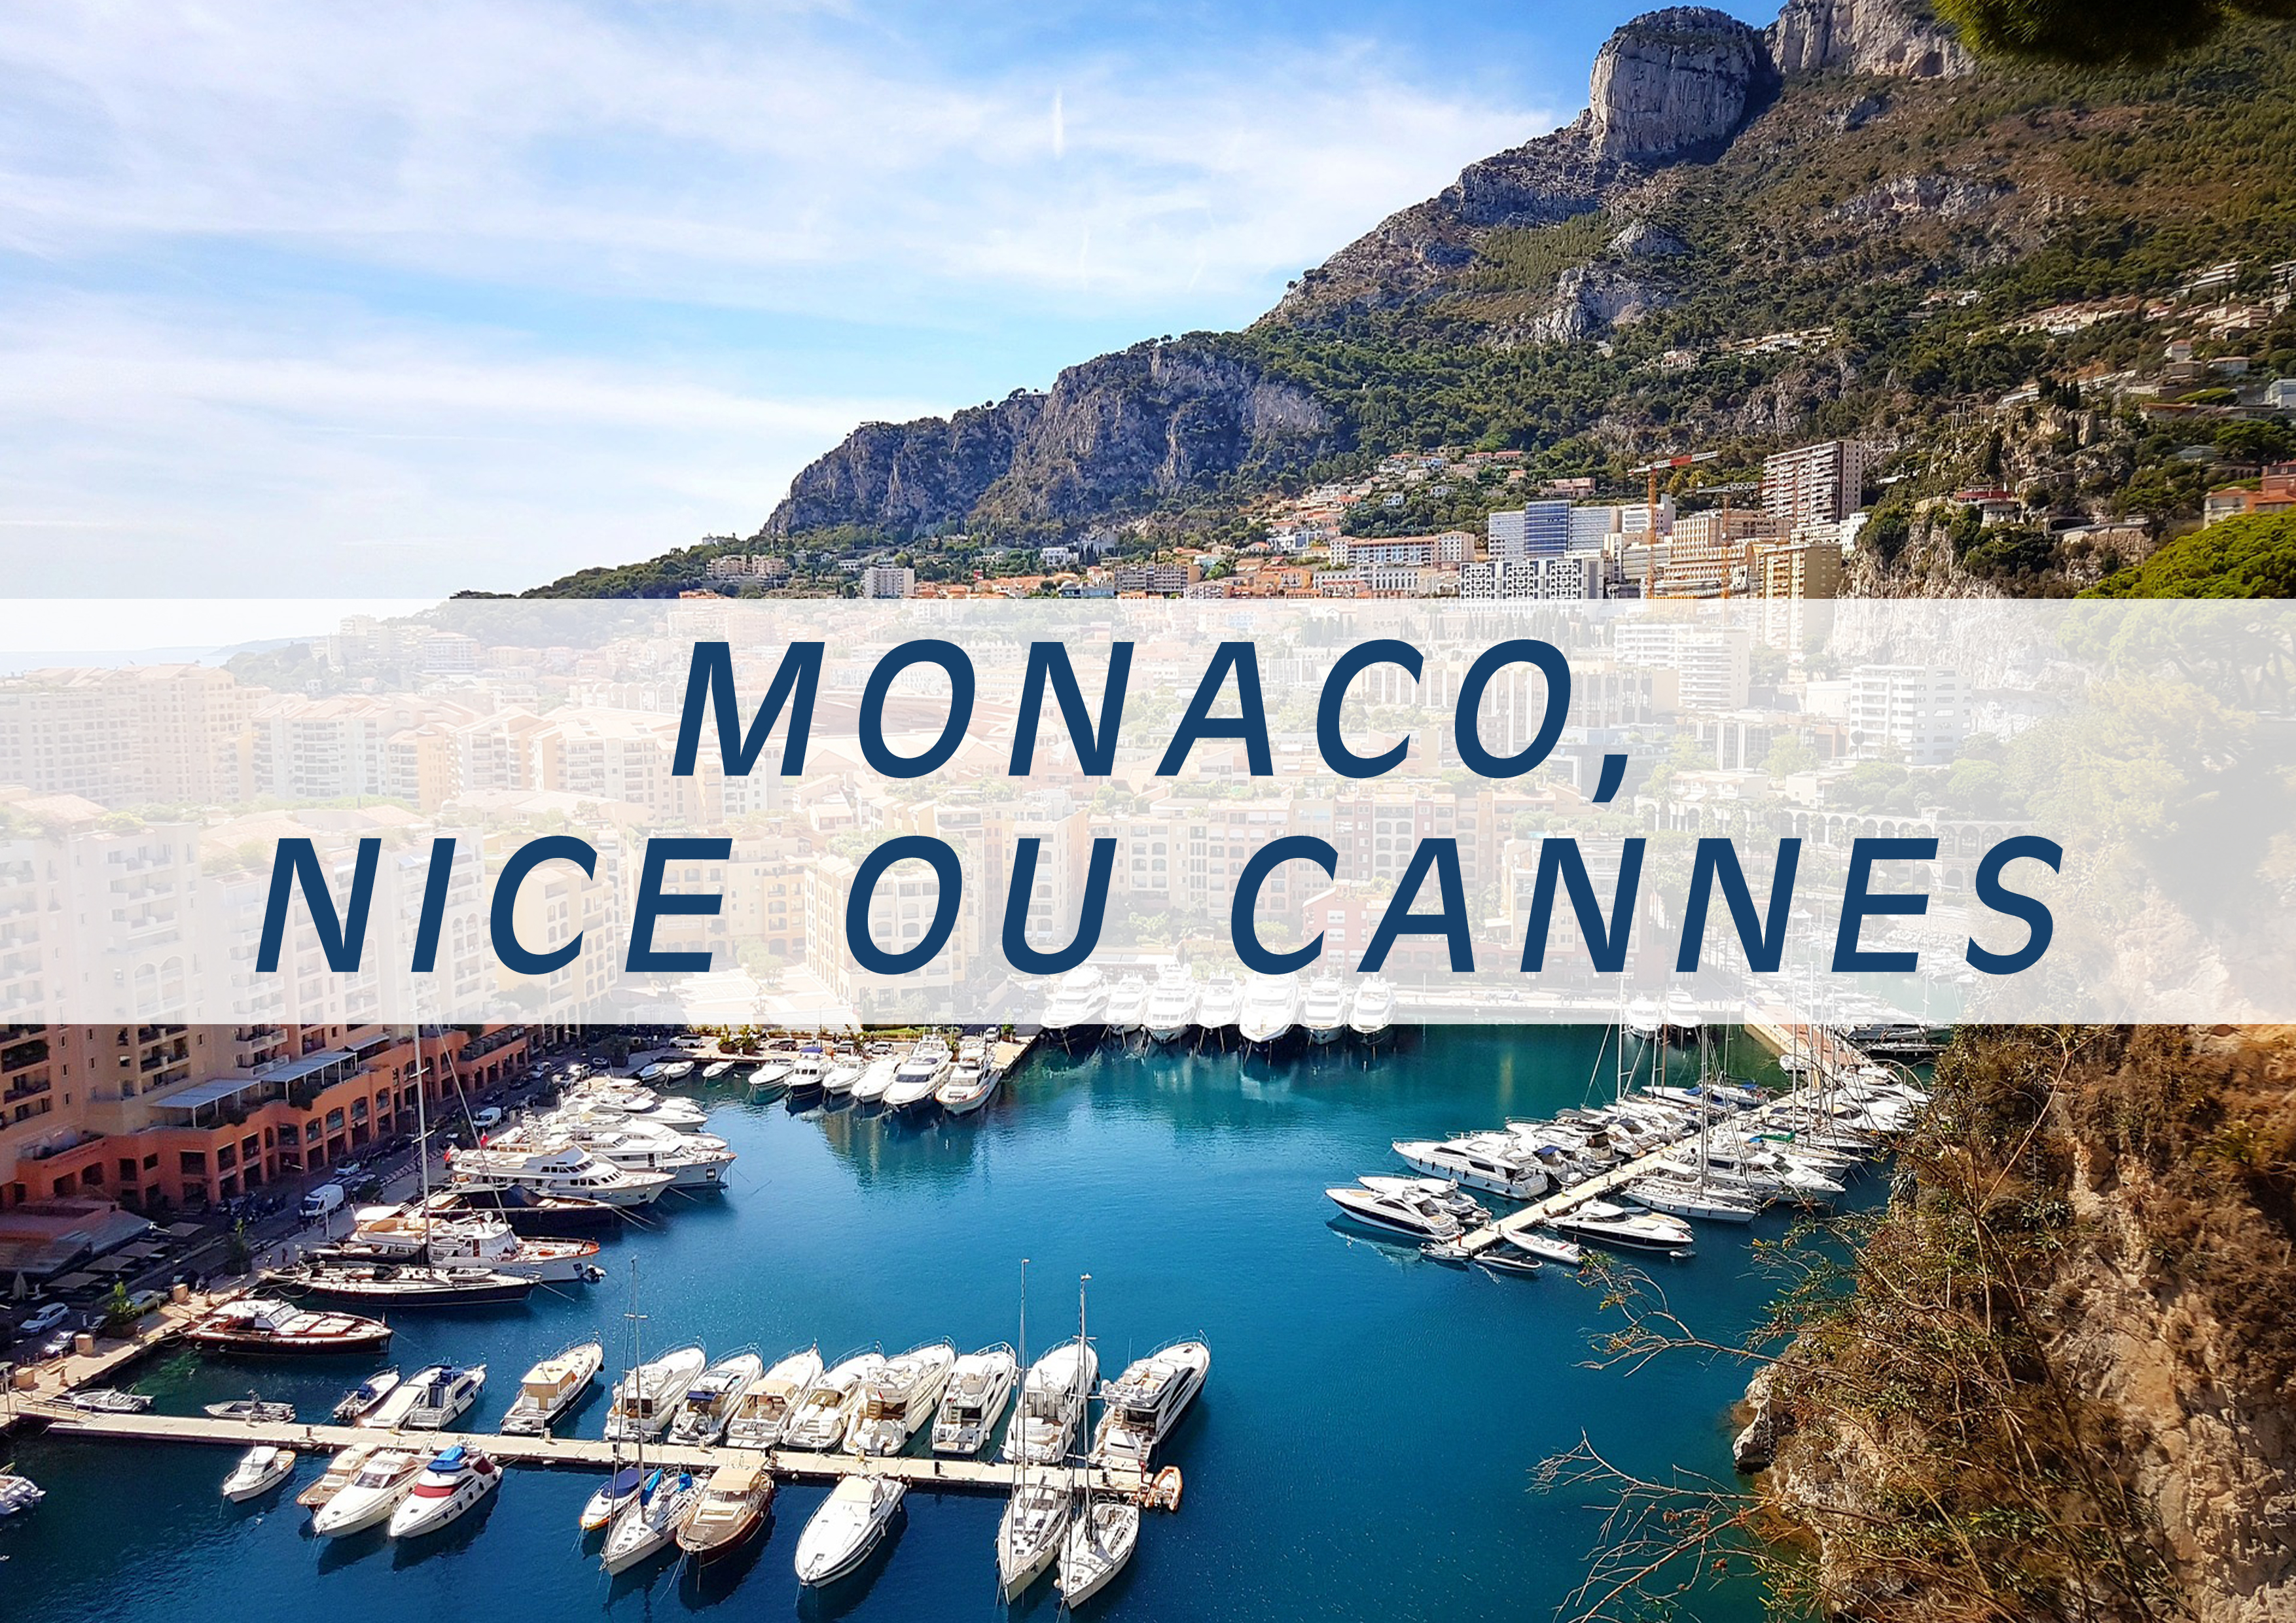 Departure from Monaco, Nice or Cannes - Heli Land & Sea - Heli Air Monaco